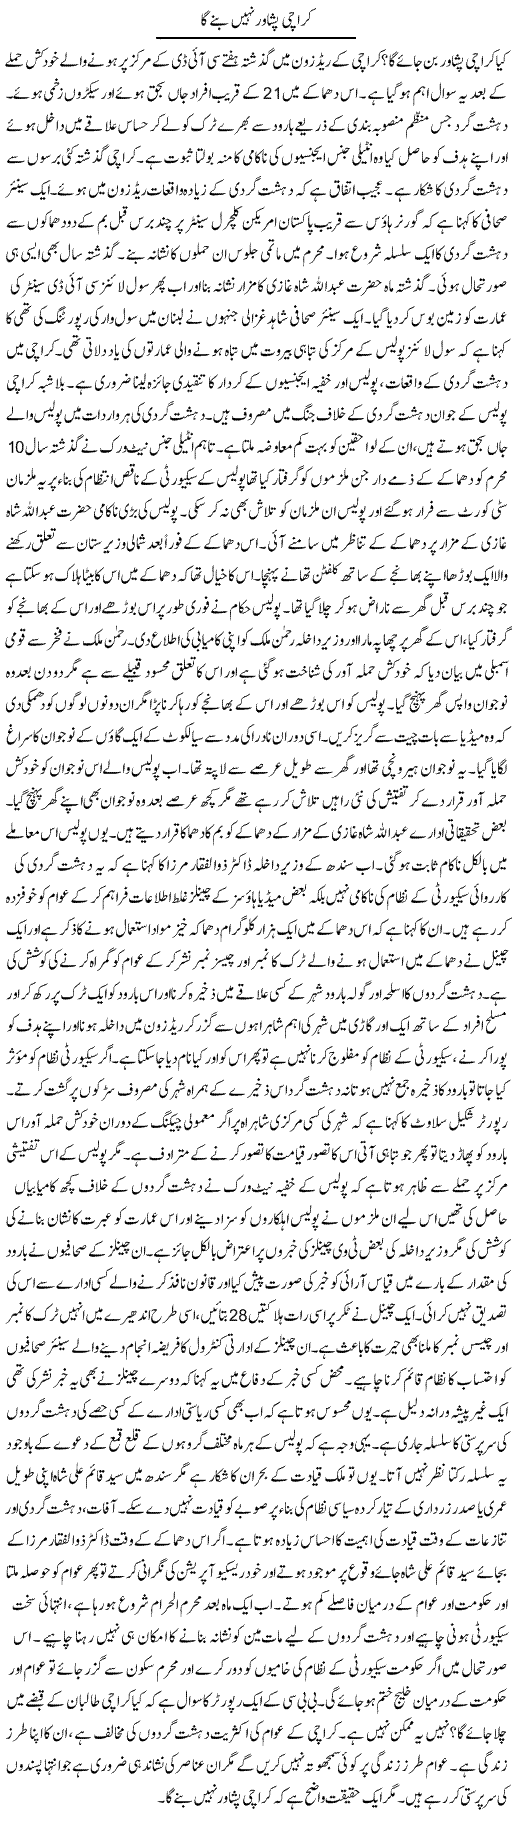 Karachi and Peshawar Express Column Tauseef Ahmed 20 November 2010